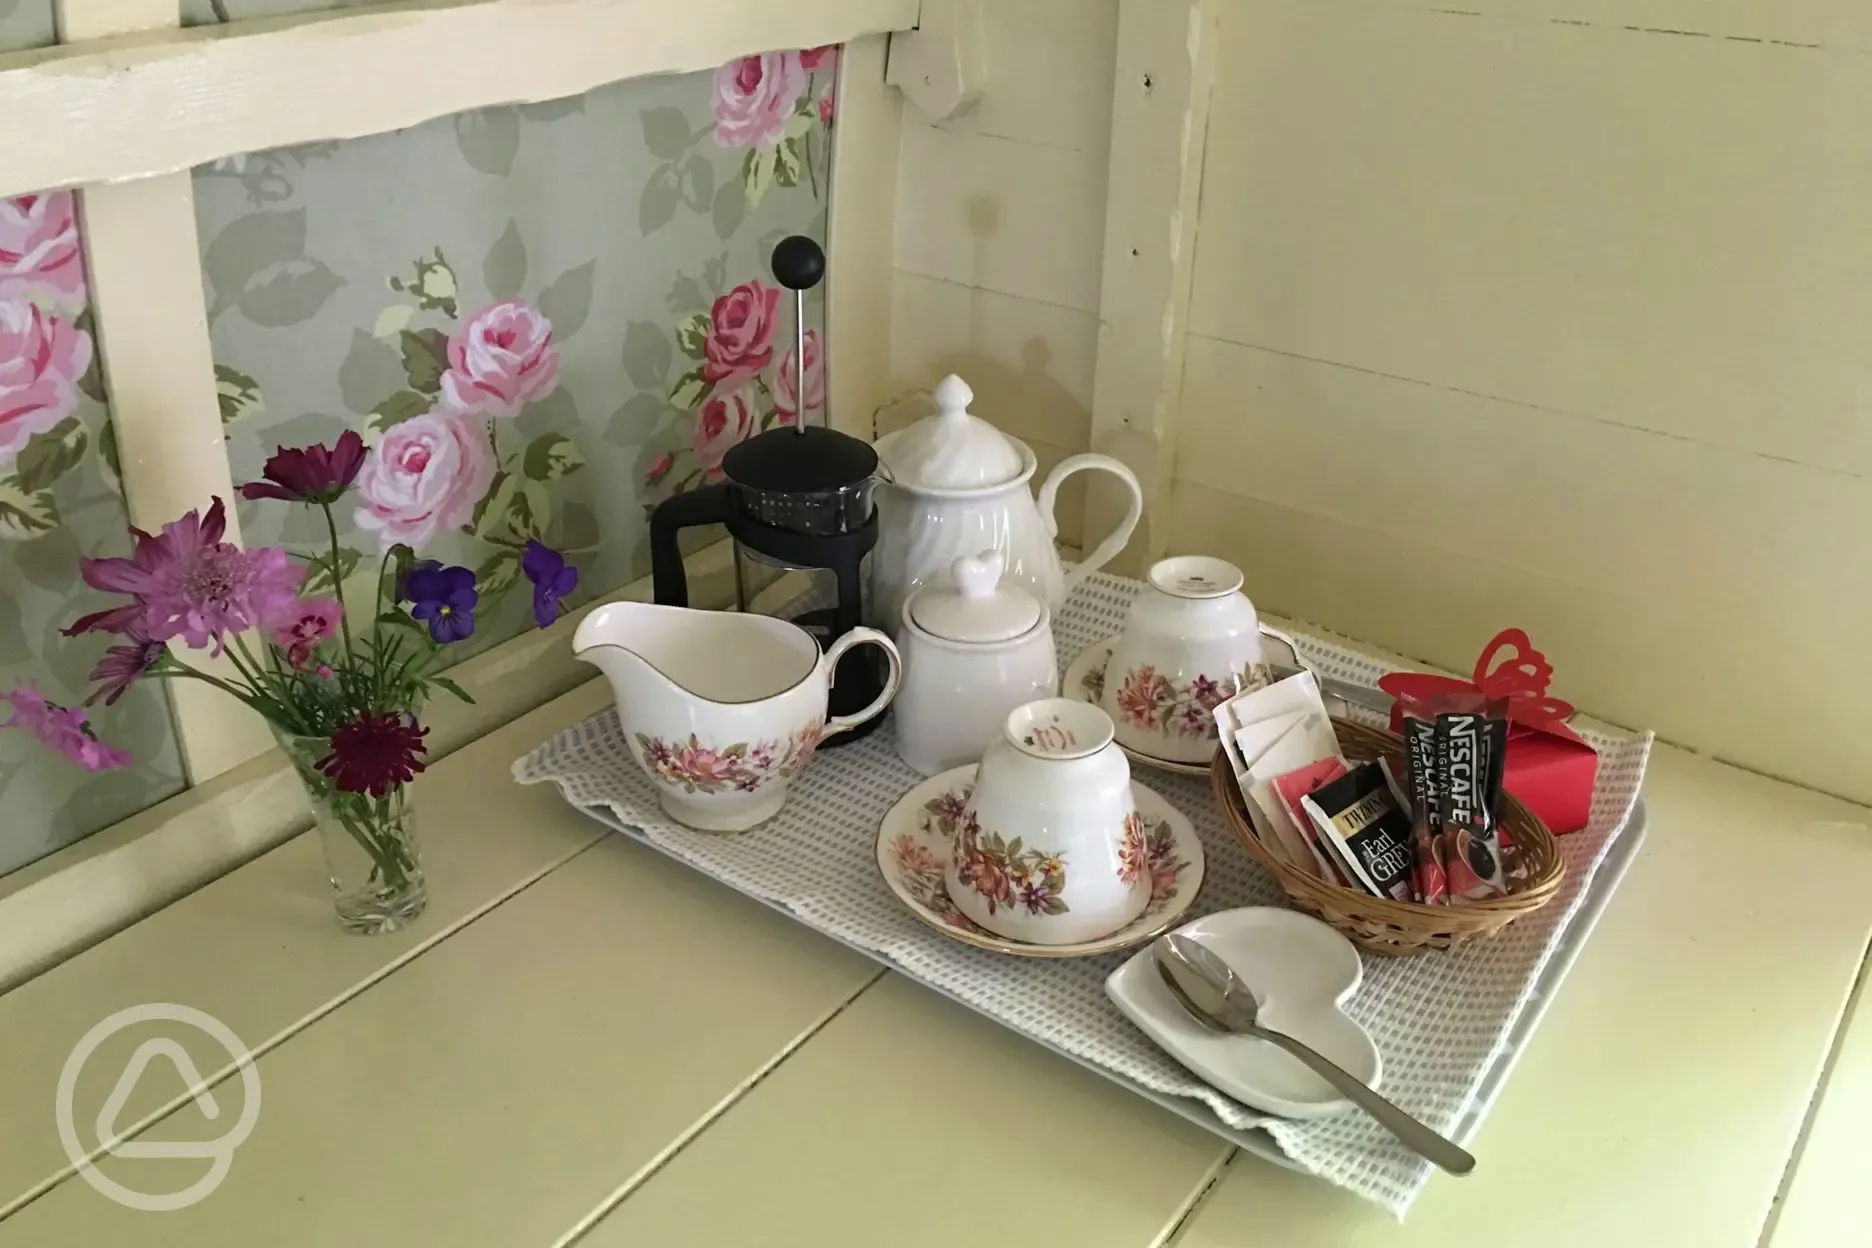 cups in gyspy caravan (mugs in summer house if you prefer)